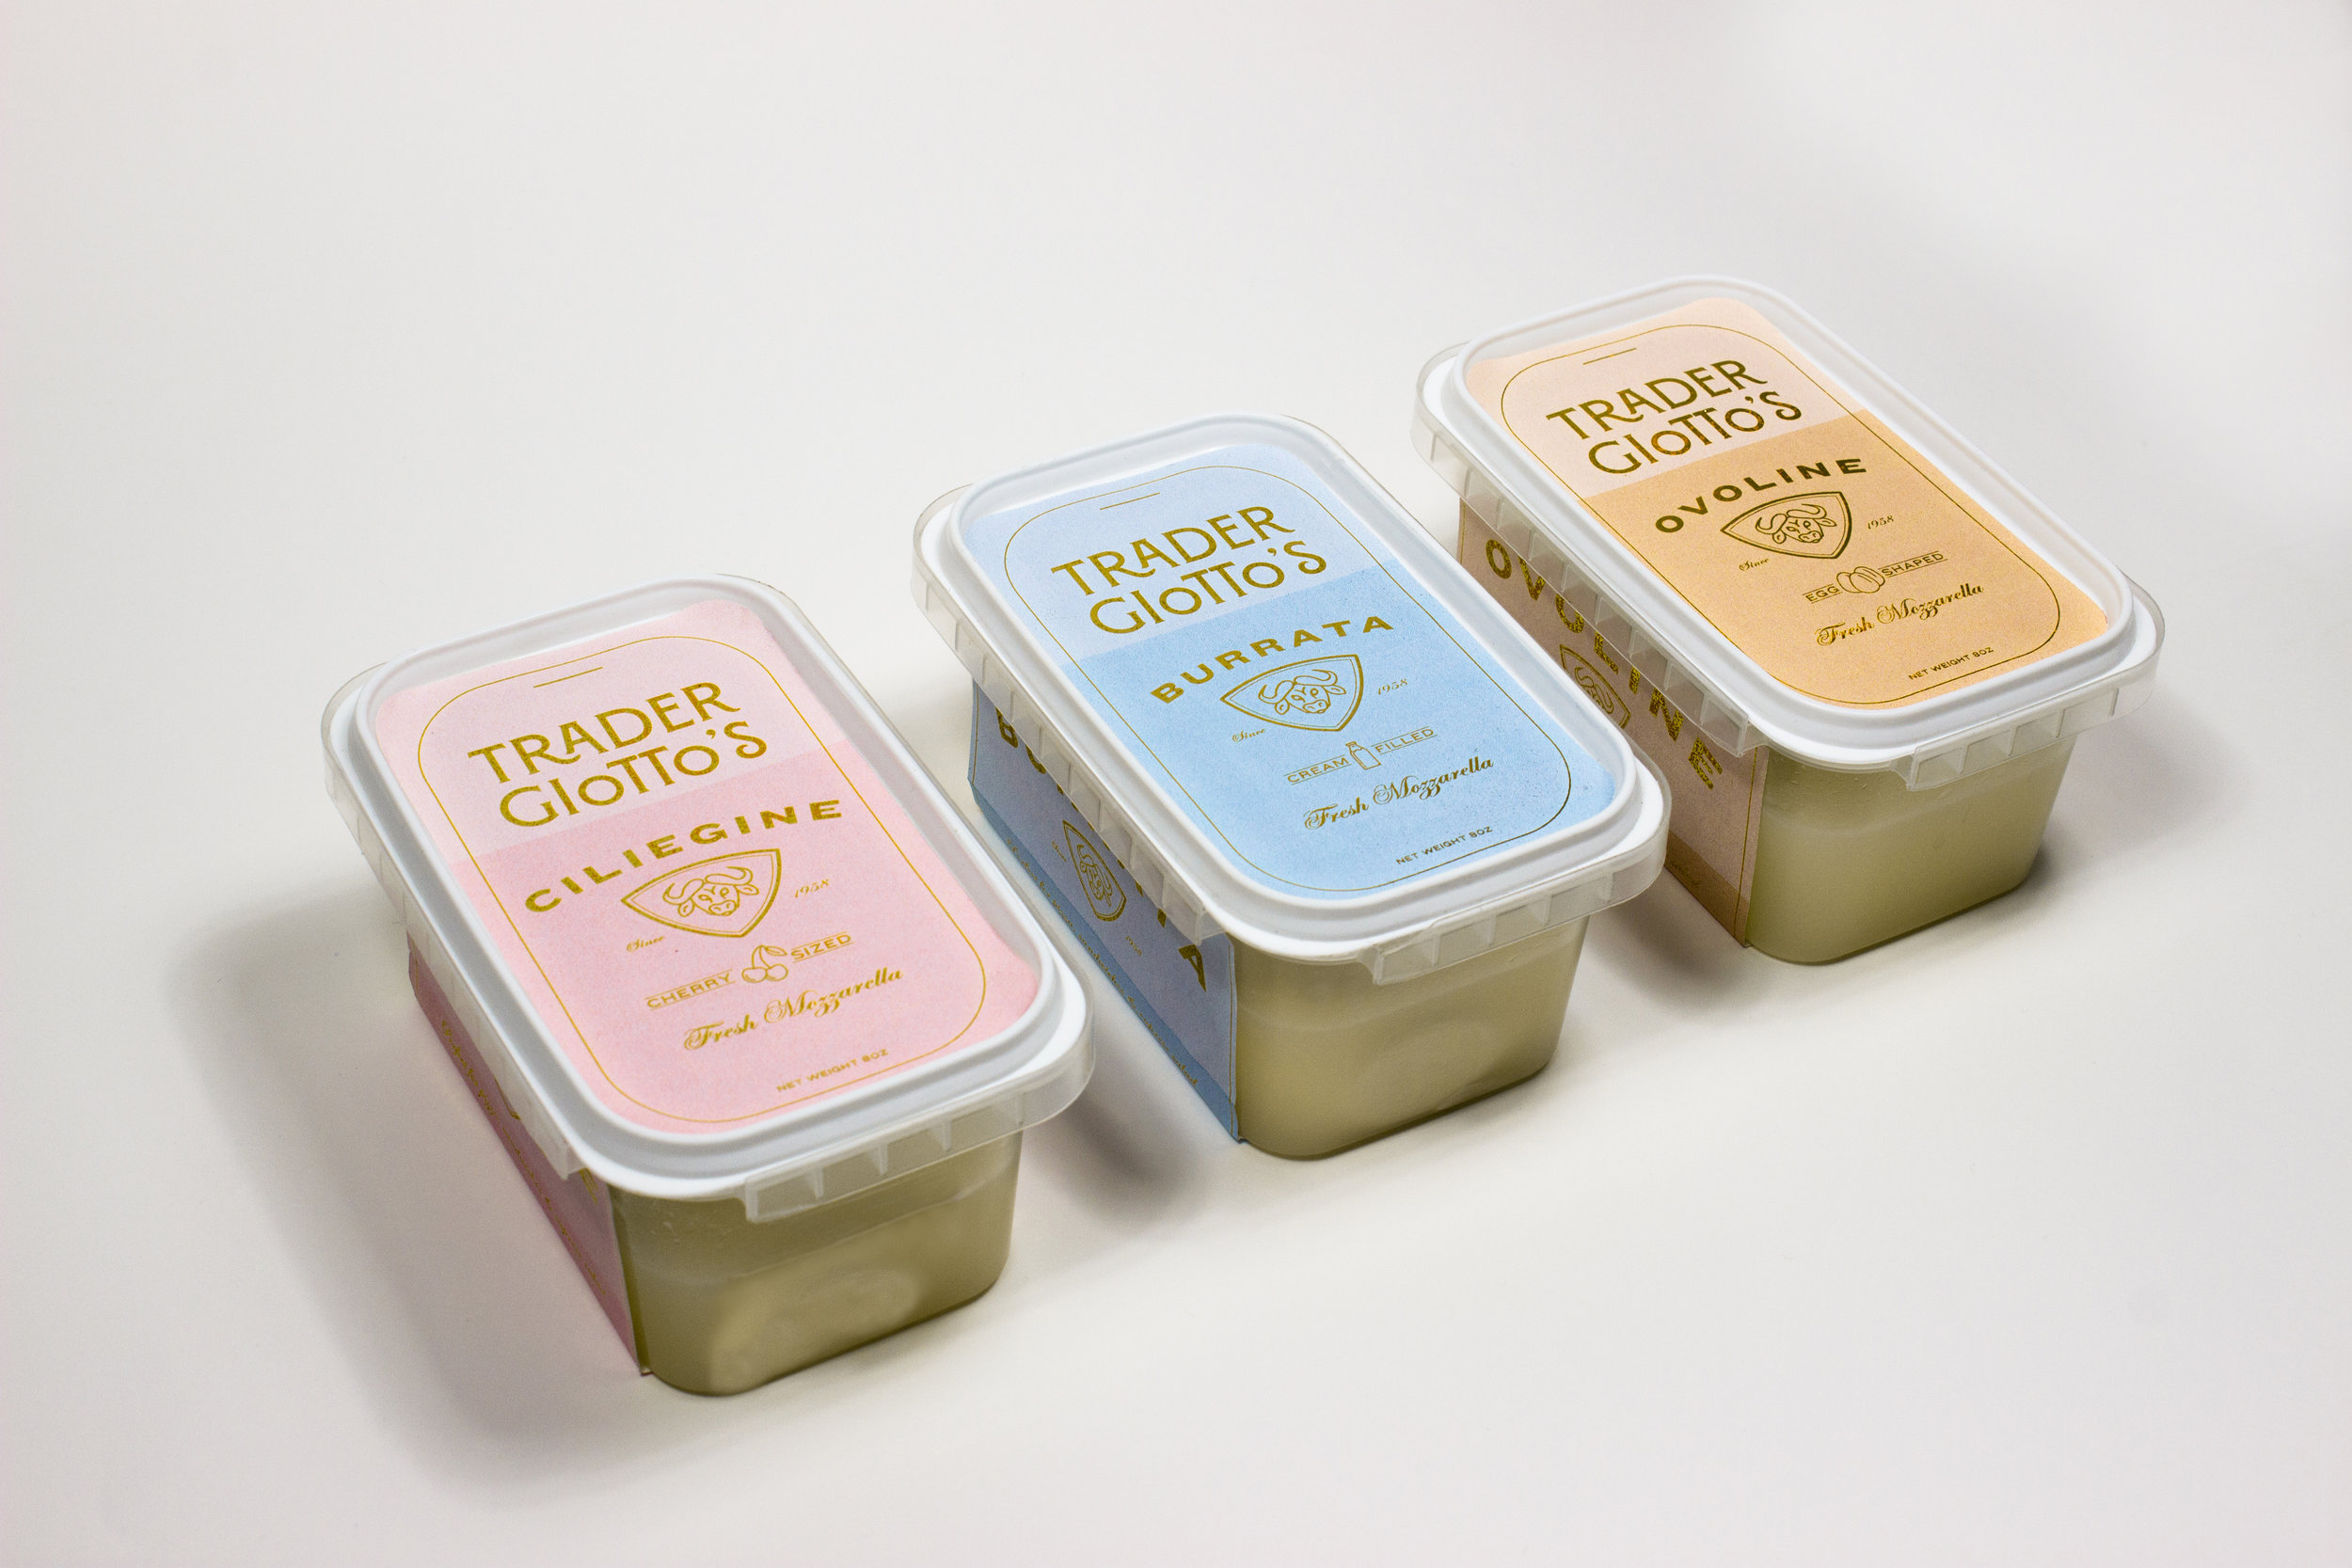 Before & After: Gelato Fiasco  Ice cream packaging, Dessert packaging  design, Gelato